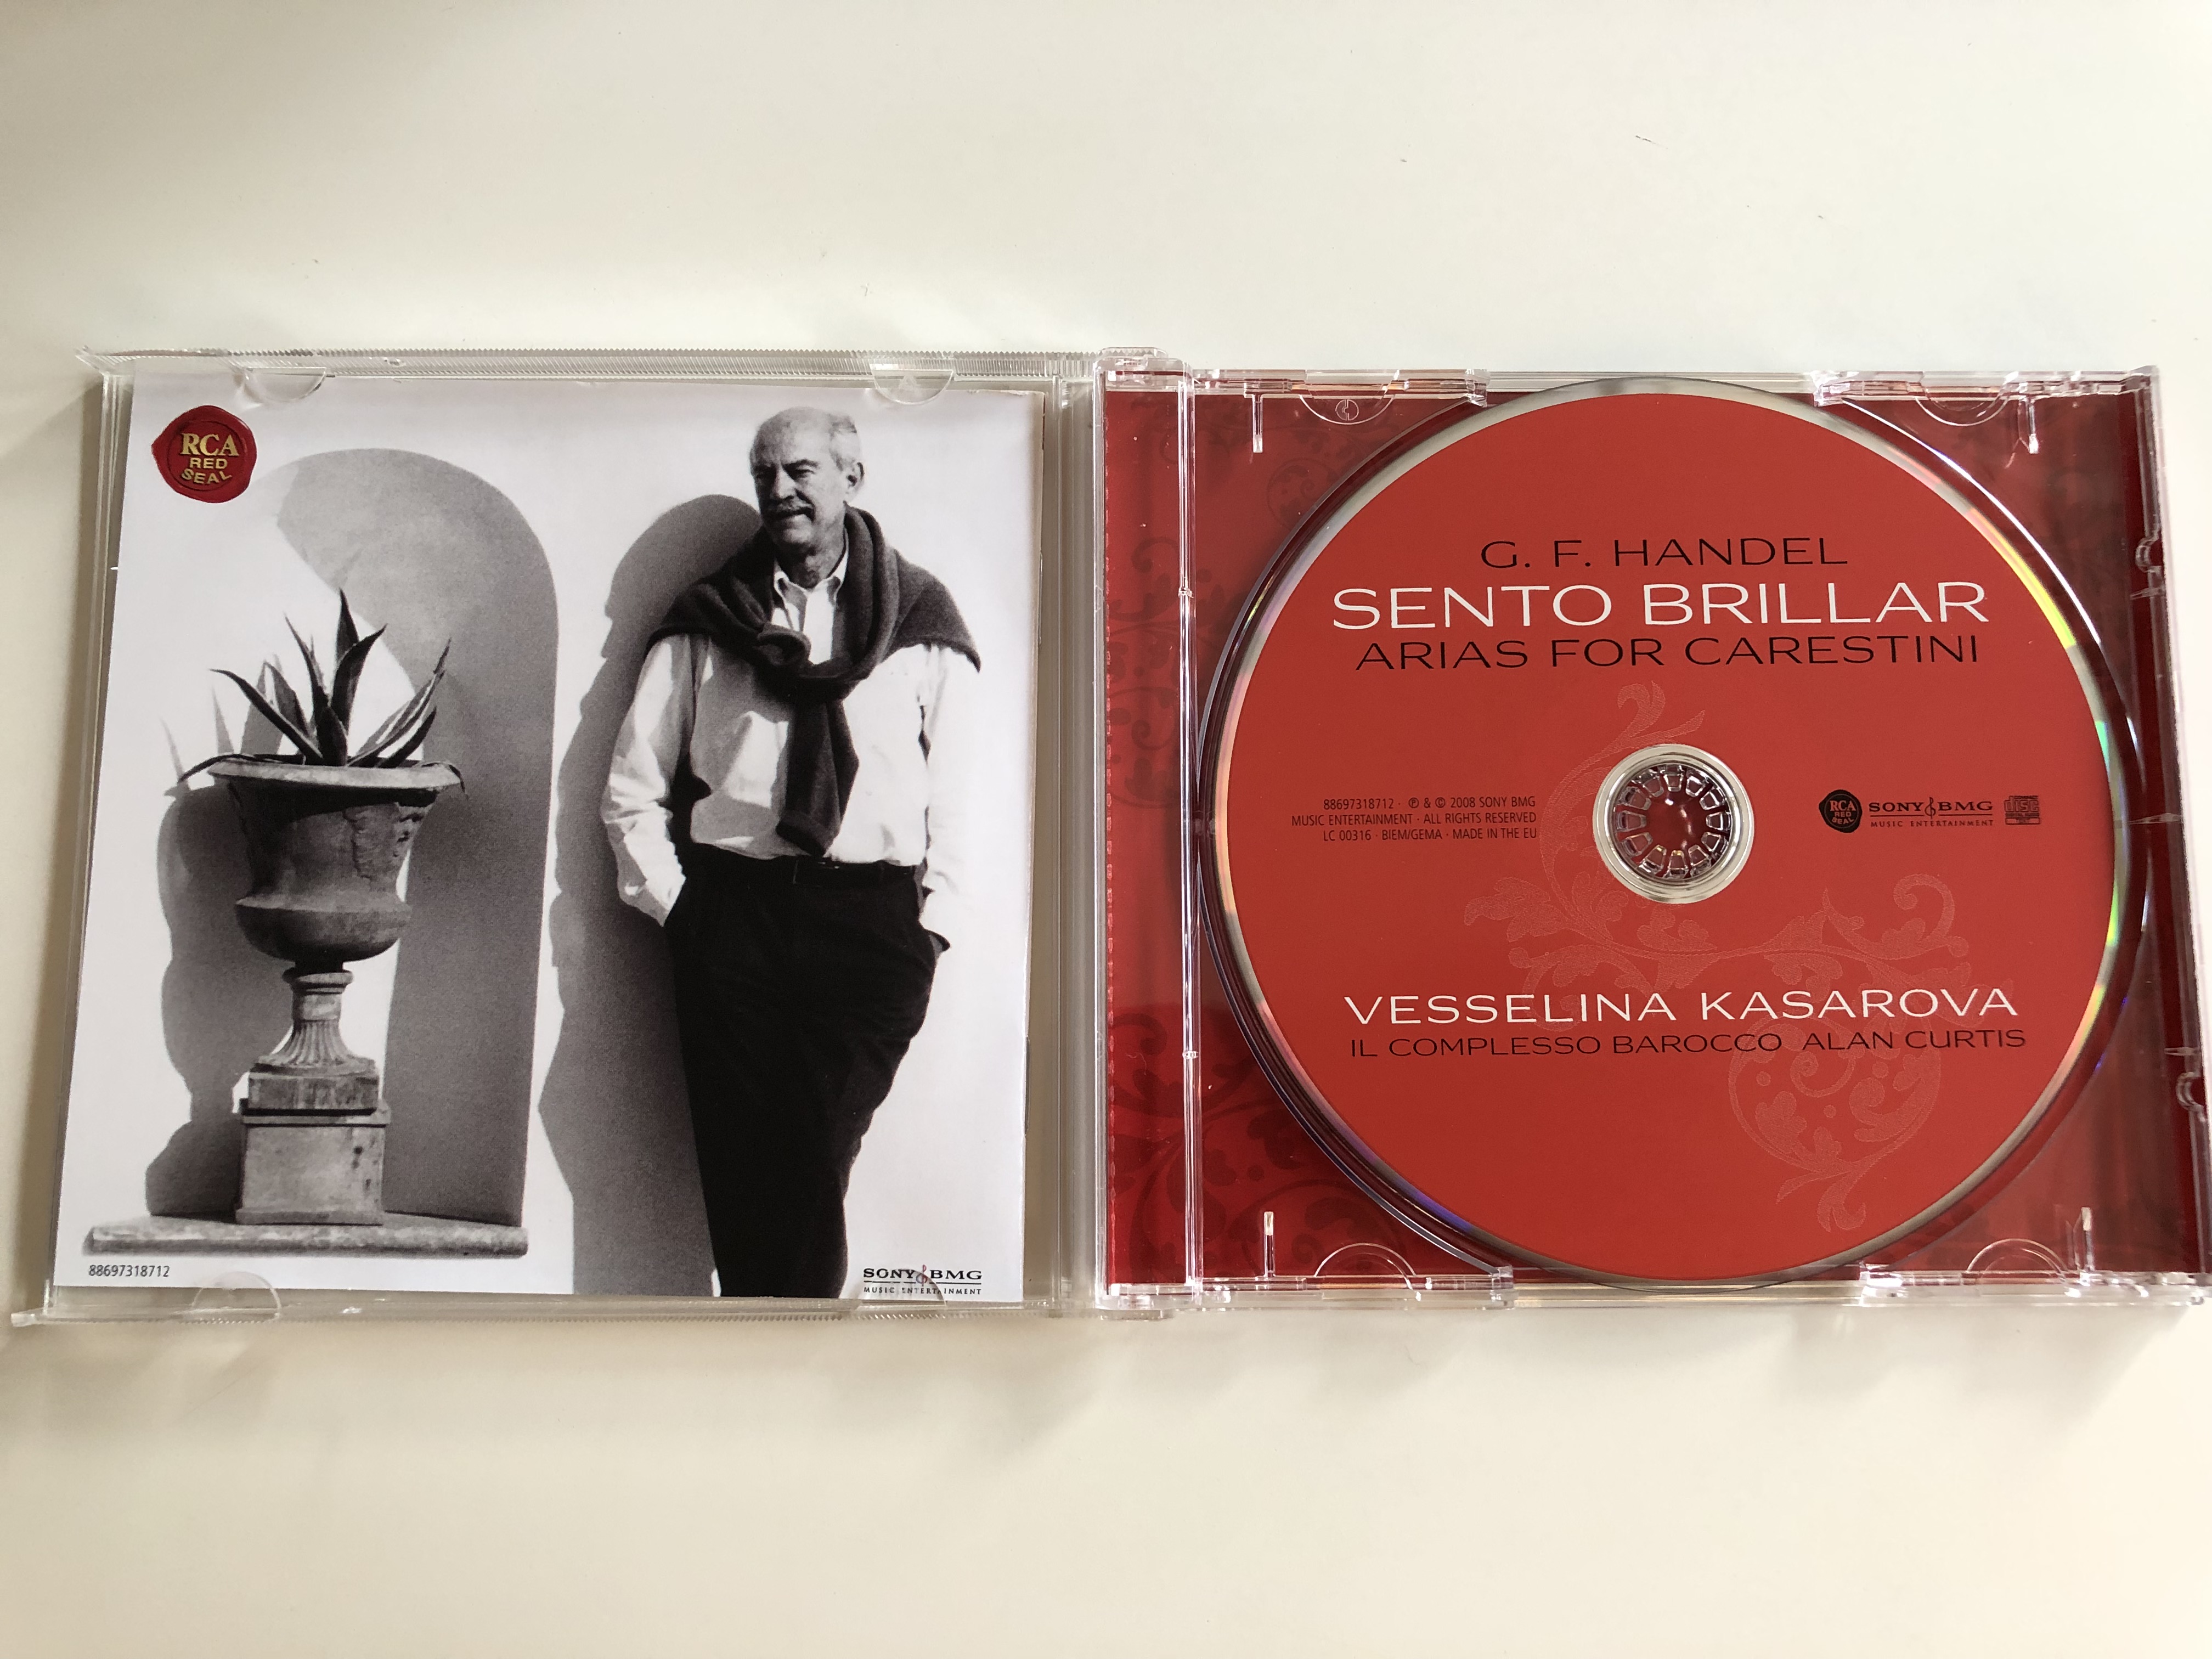 g.f.-handel-sento-brillar-arias-for-carestini-vesselina-kasarova-il-complesso-barocco-conducted-by-alan-curtis-sony-bmg-audio-cd-2008-9-.jpg